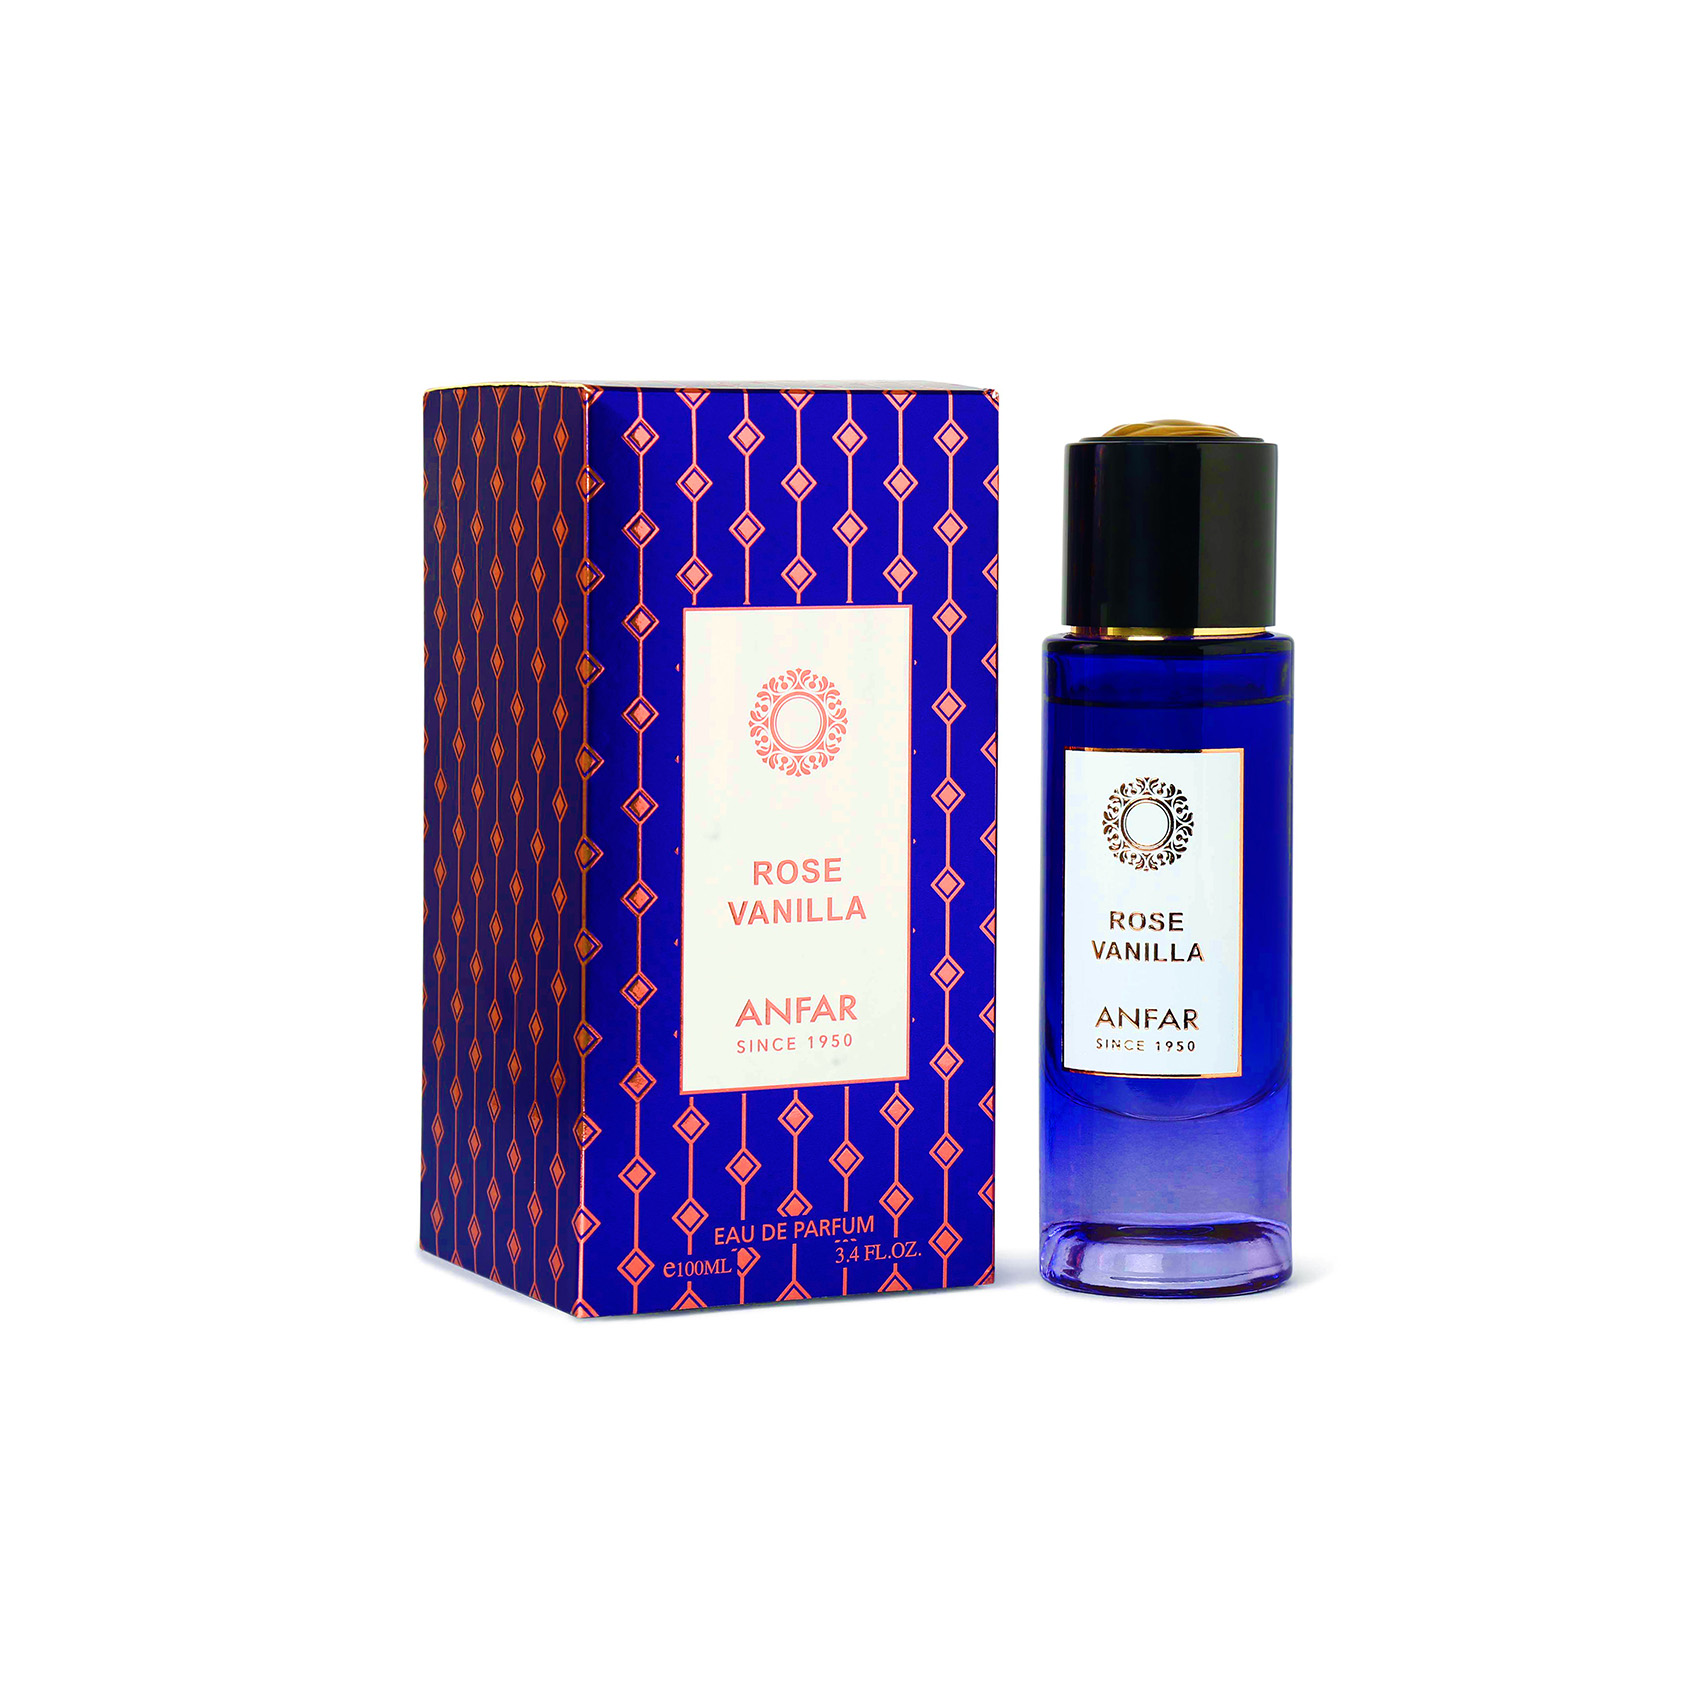 Rose Vanilla Eau De Parfum 100ml Perfume For Men & Women  By Anfar- Made In India